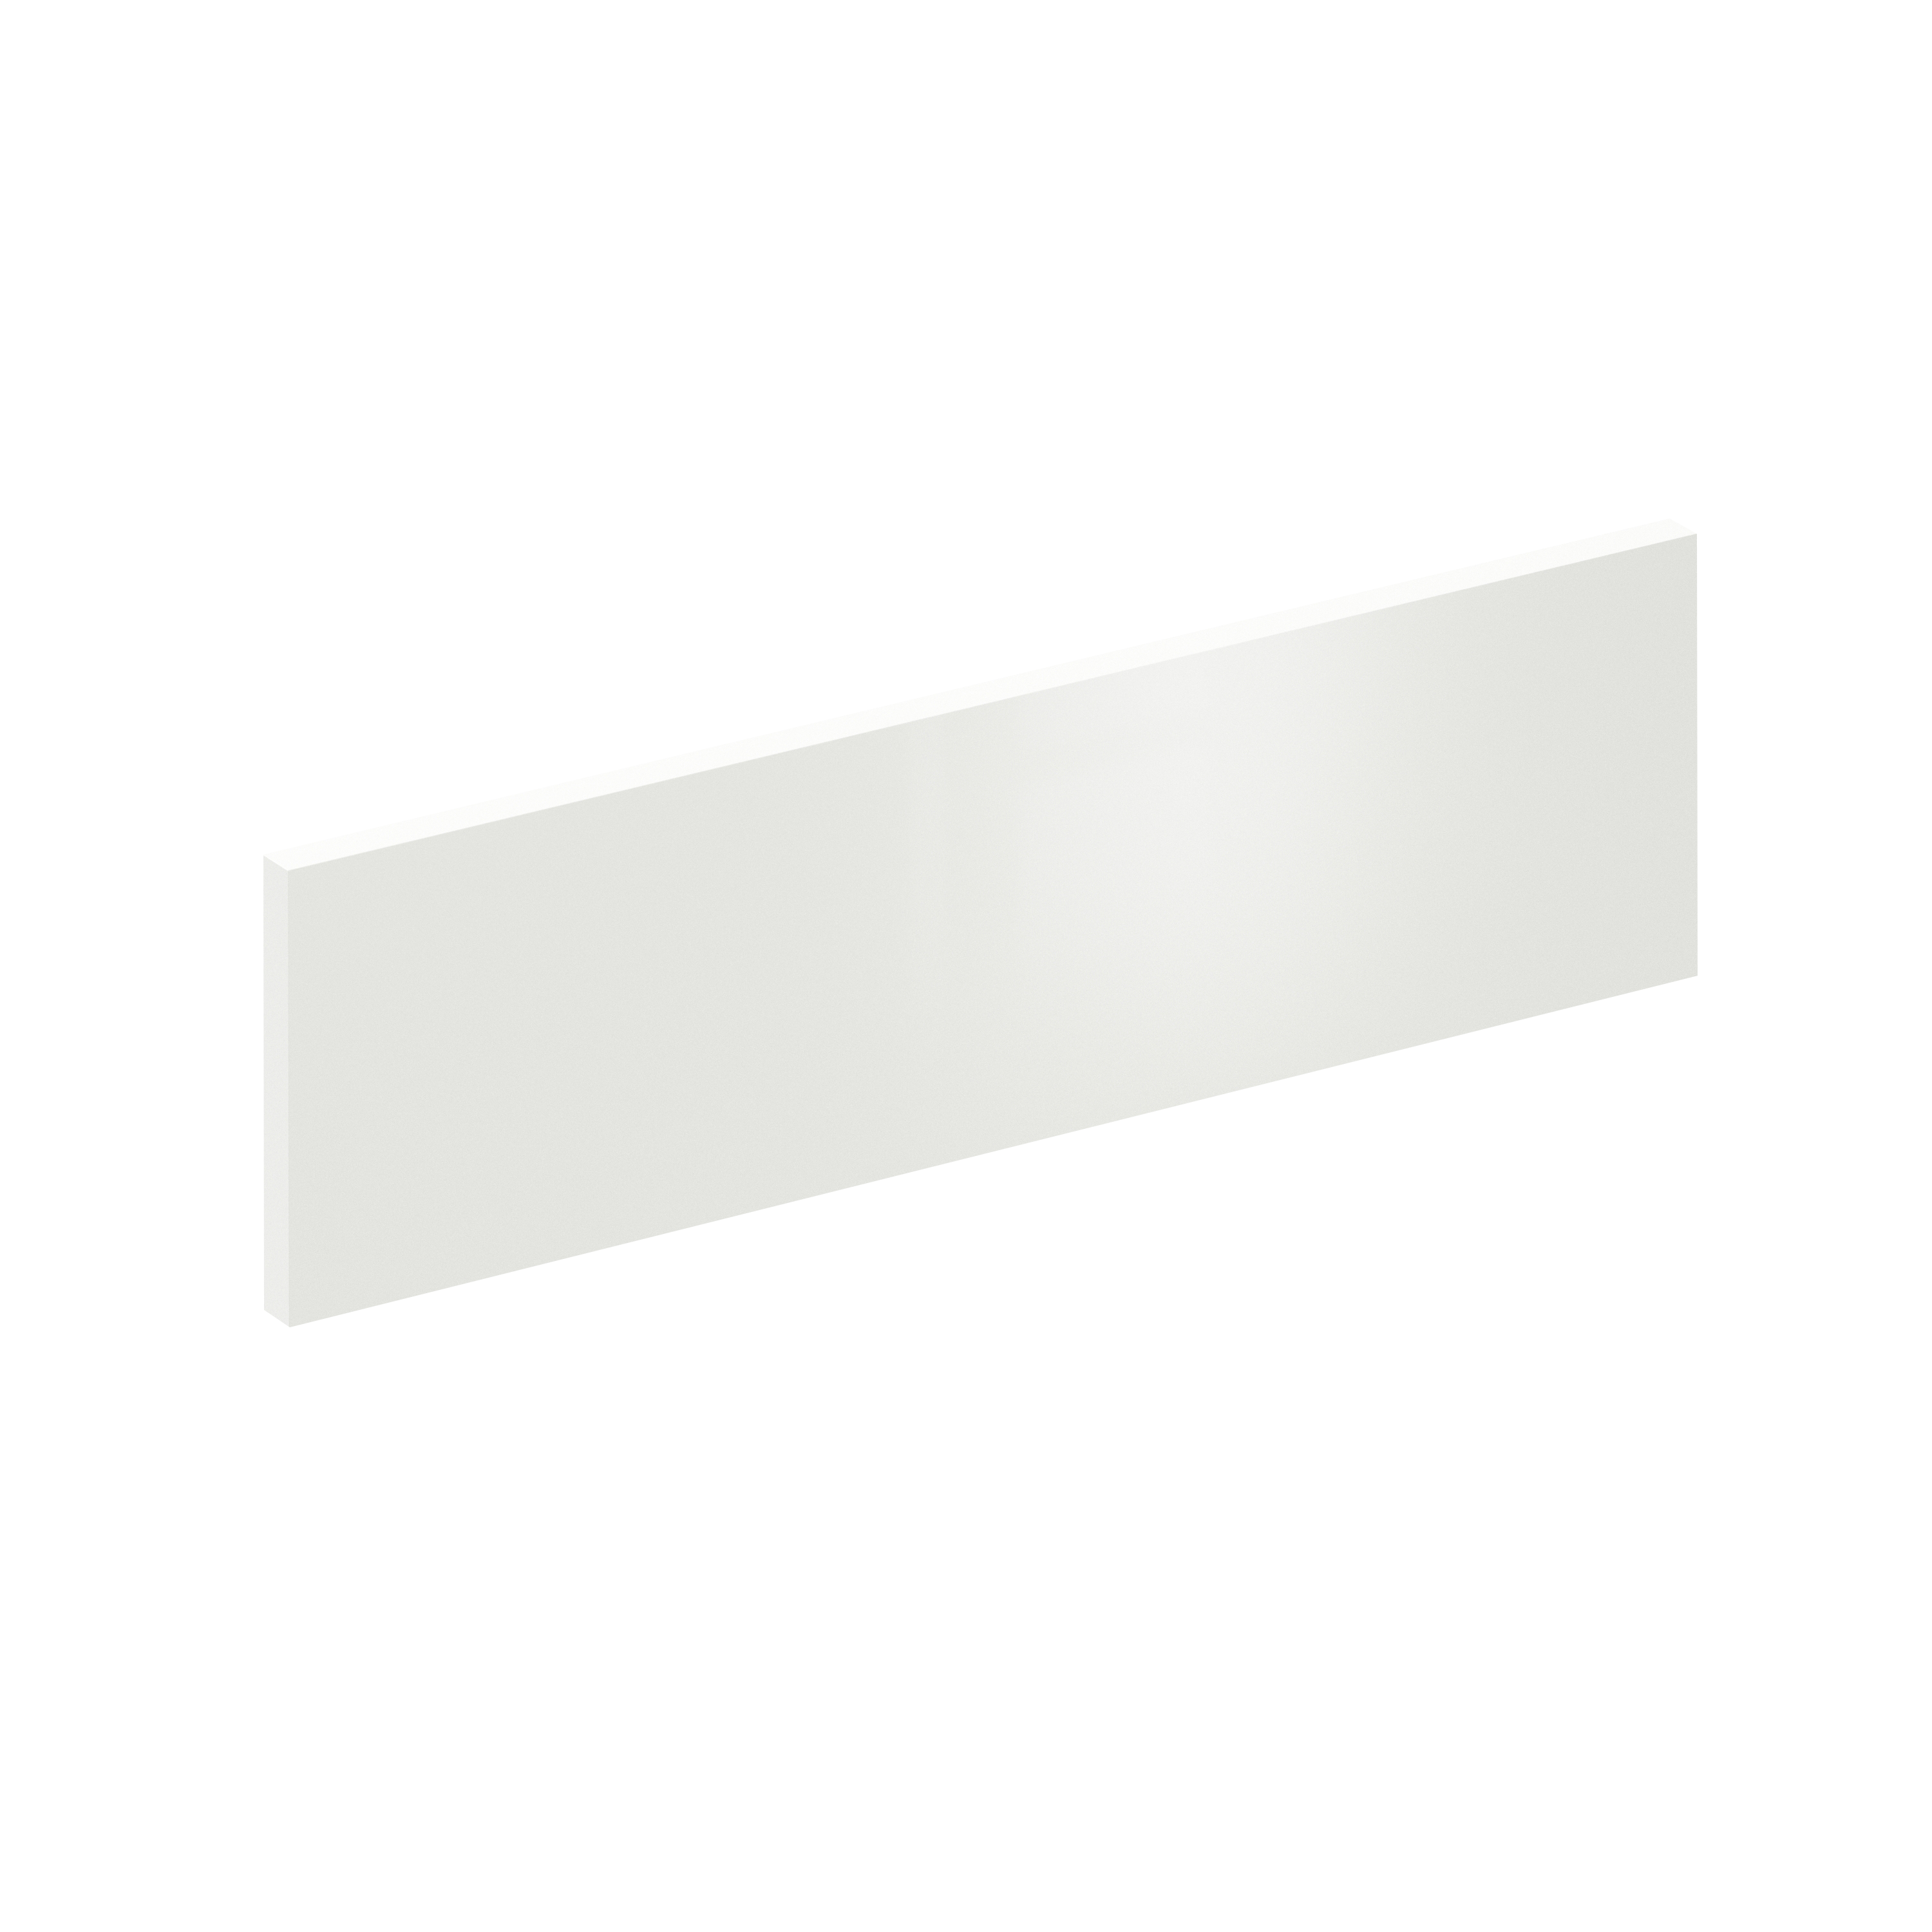 Regleta hor/lw de cocina sevilla blanco brillo h 16.5 x 60 cm